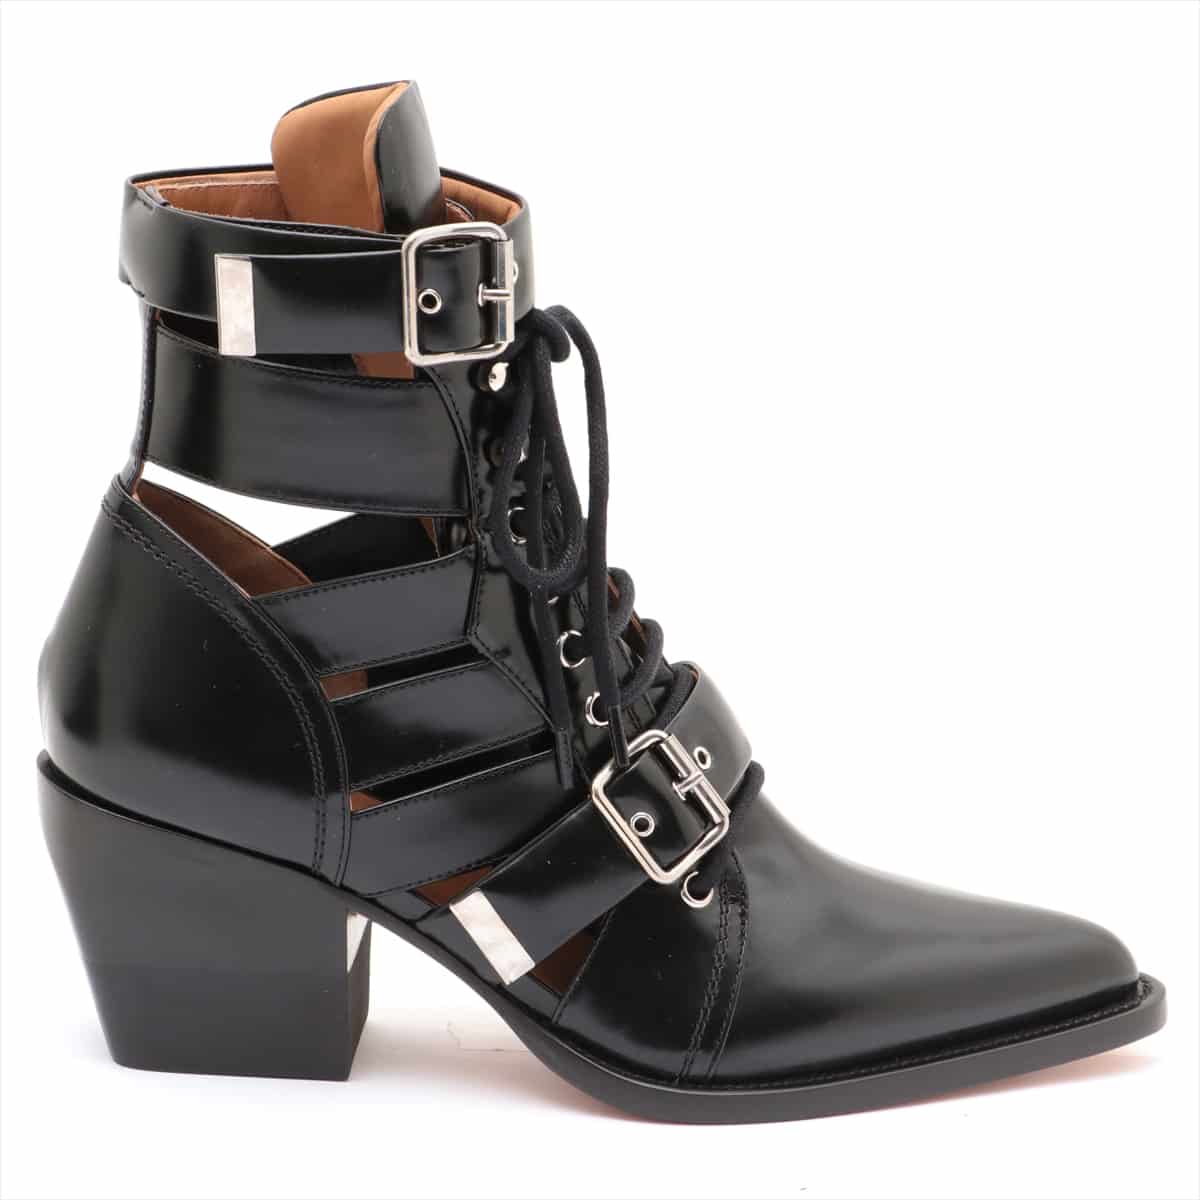 Chloe Leather Boots 41 Ladies' Black